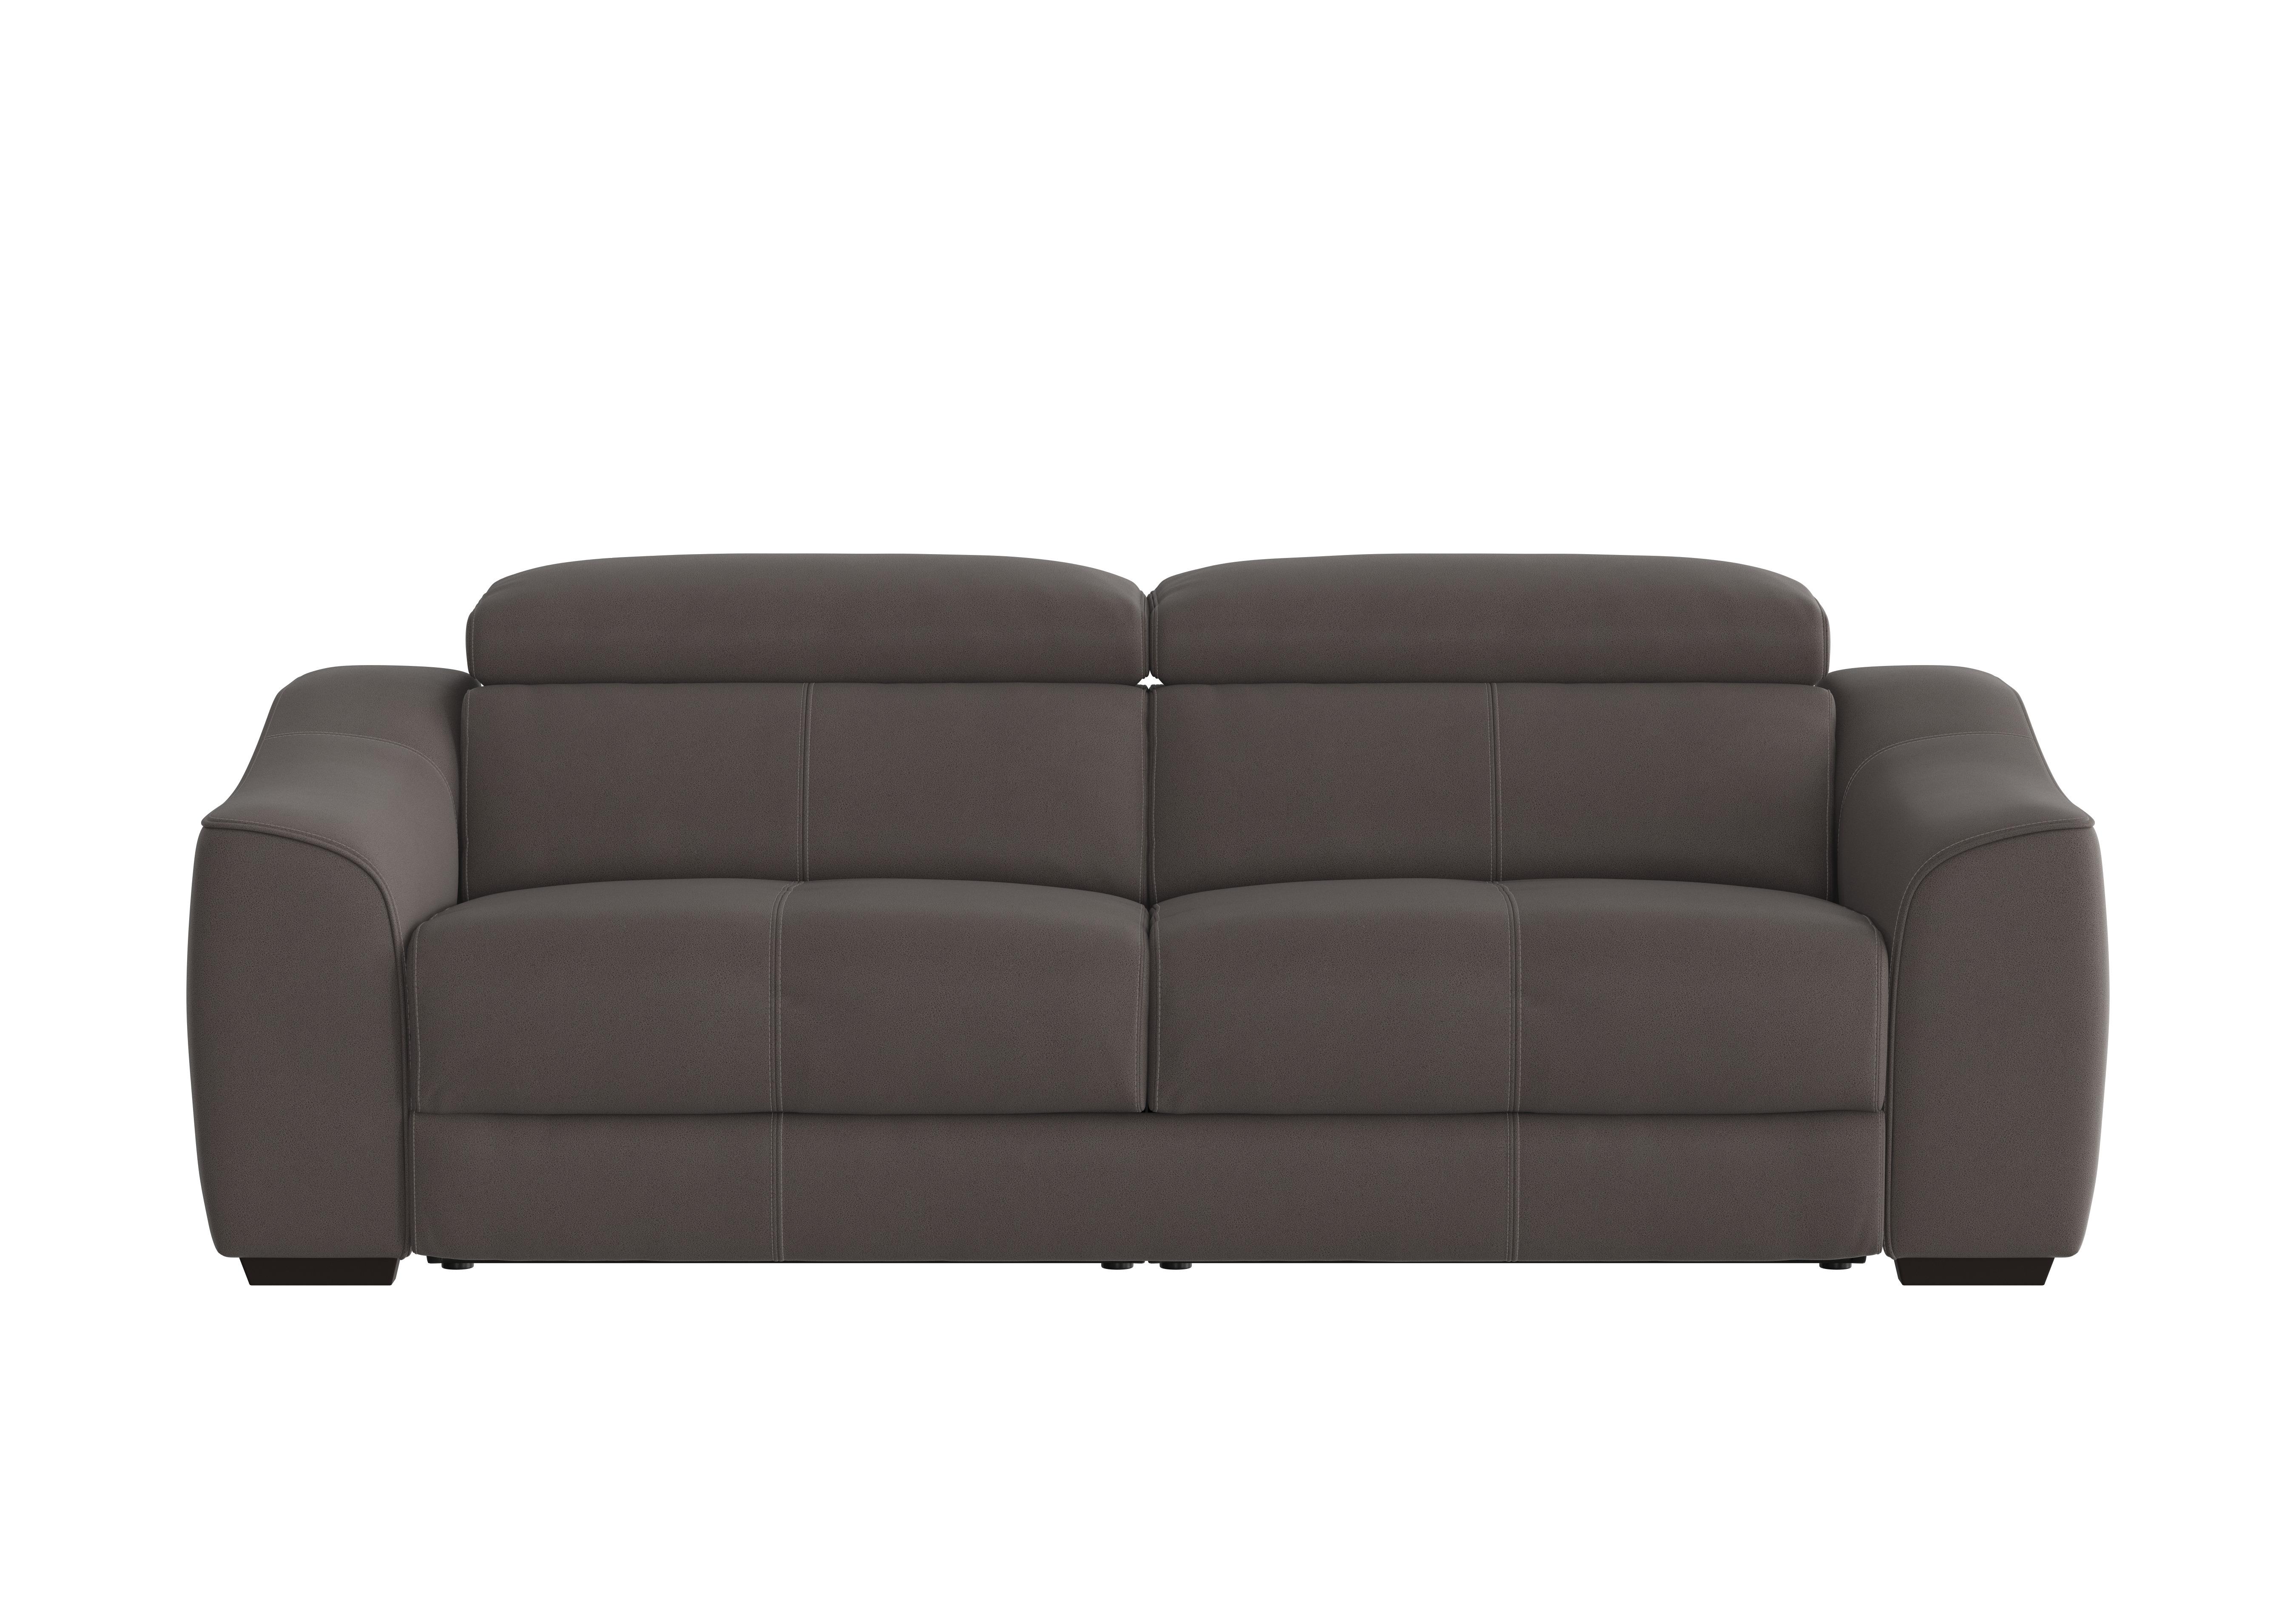 Elixir 3 Seater Fabric Sofa Bed in Bfa-Blj-R16 Grey on Furniture Village